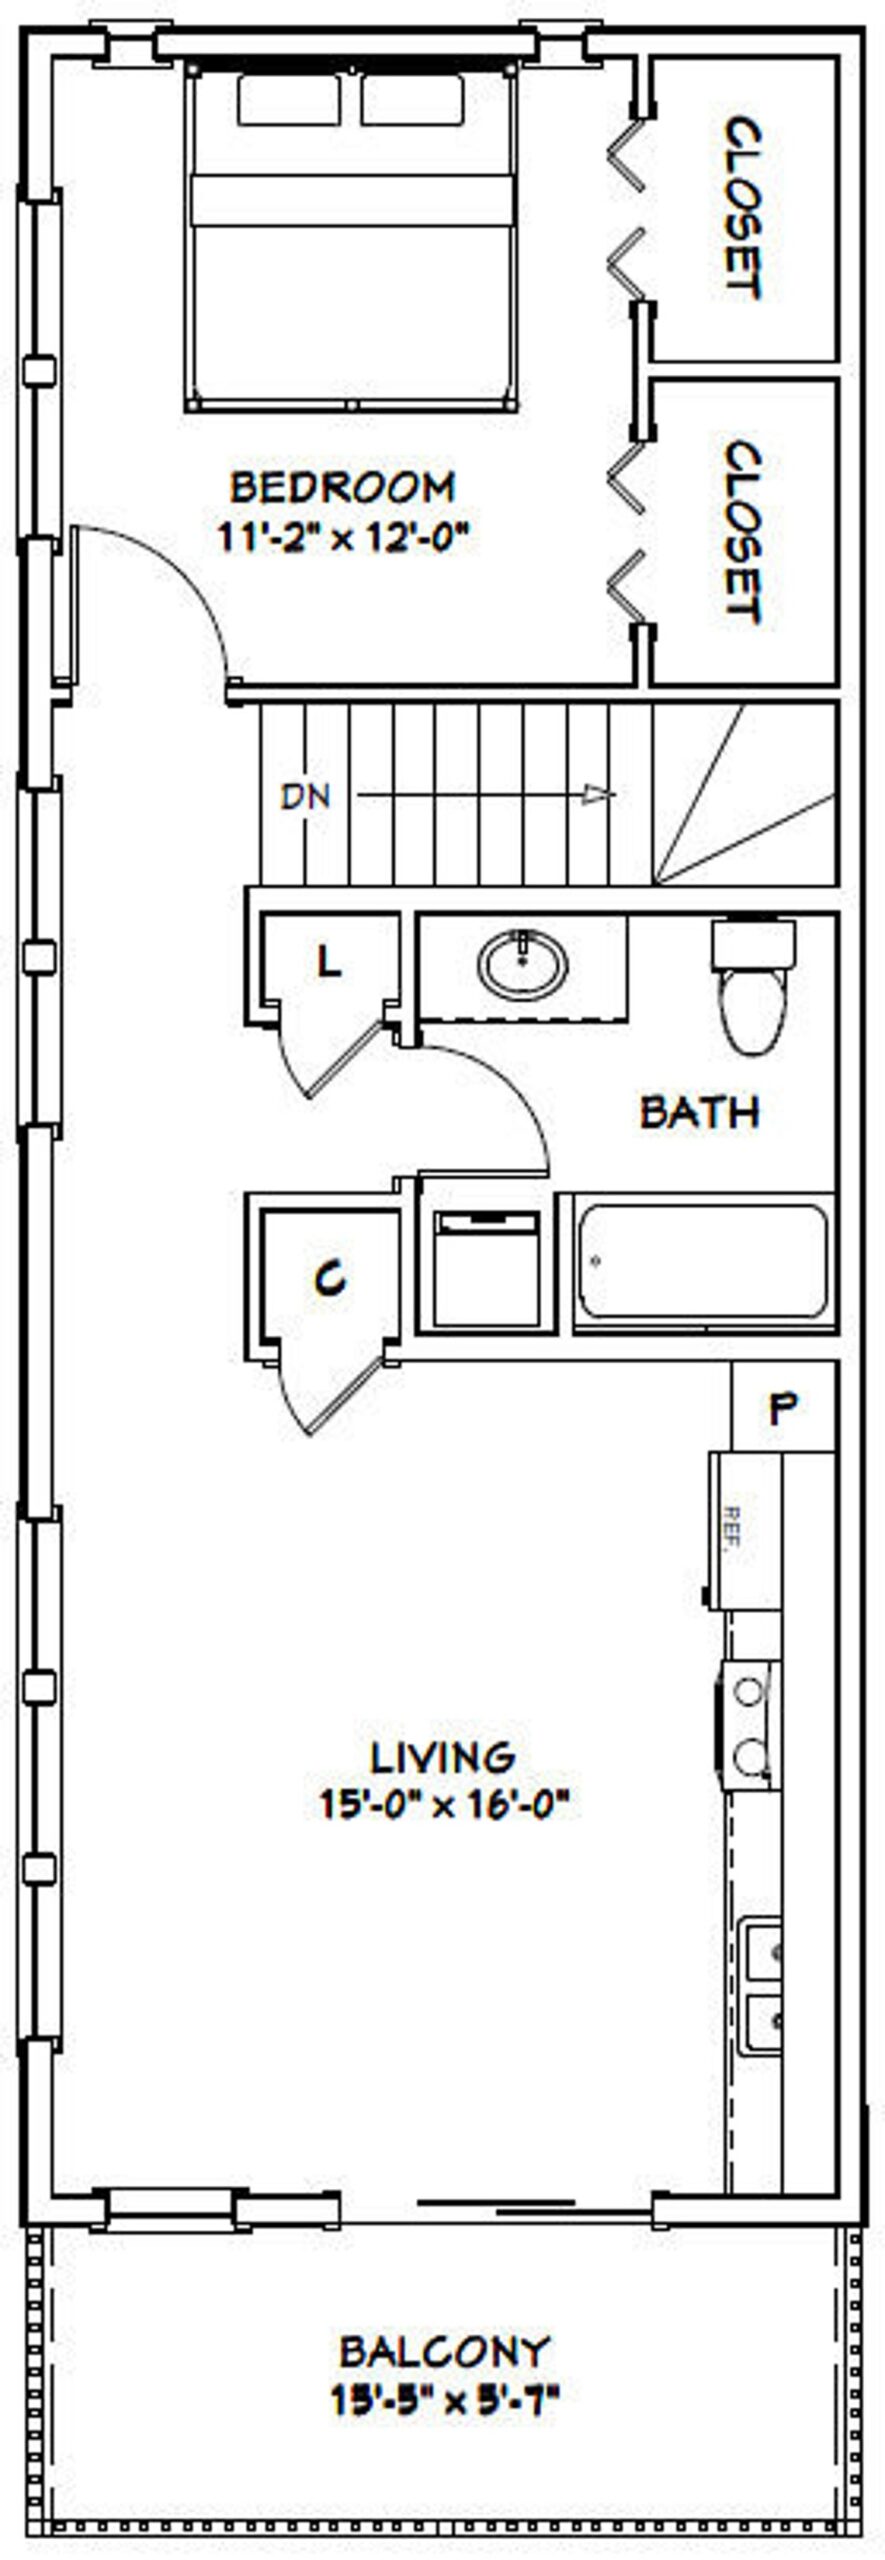 36x42-Small-House-Plan-1-Bedroom-1.5-Bath-961-sq-ft-PDF-Floor-Plan-first-floor